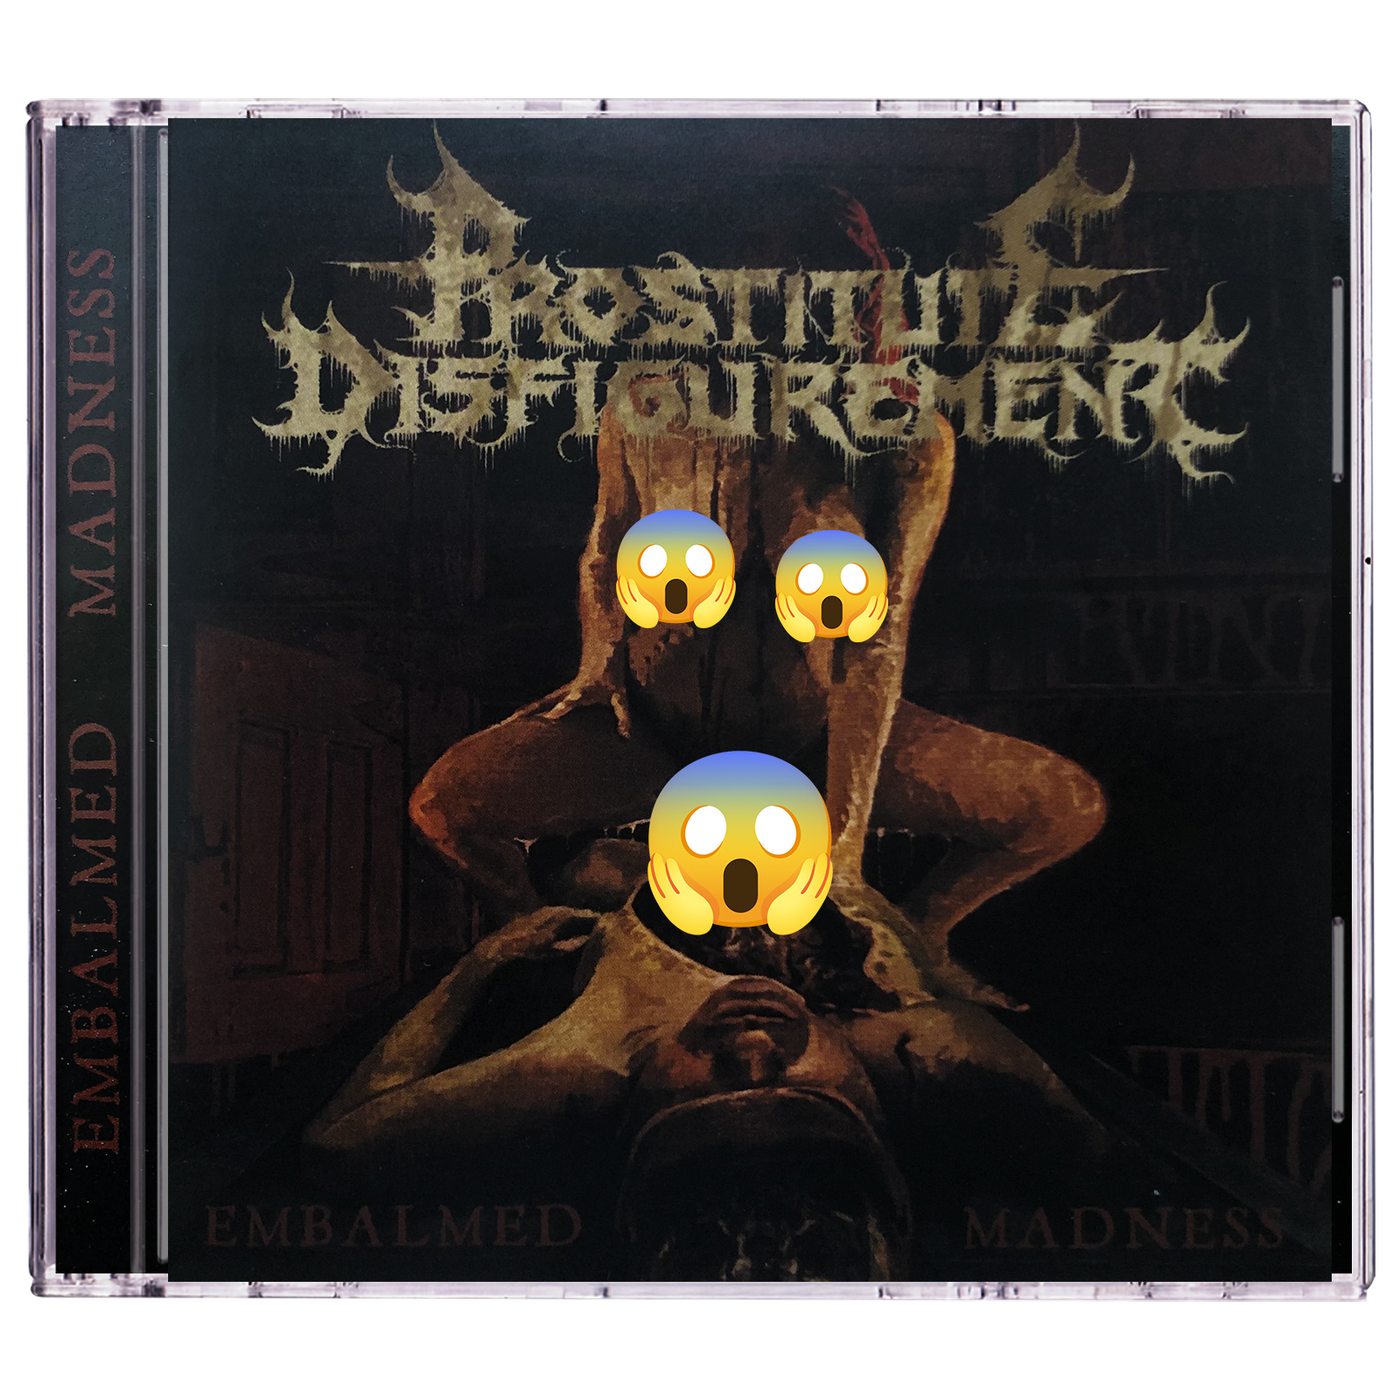 Prostitute Disfigurement 'Embalmed Madness' CD